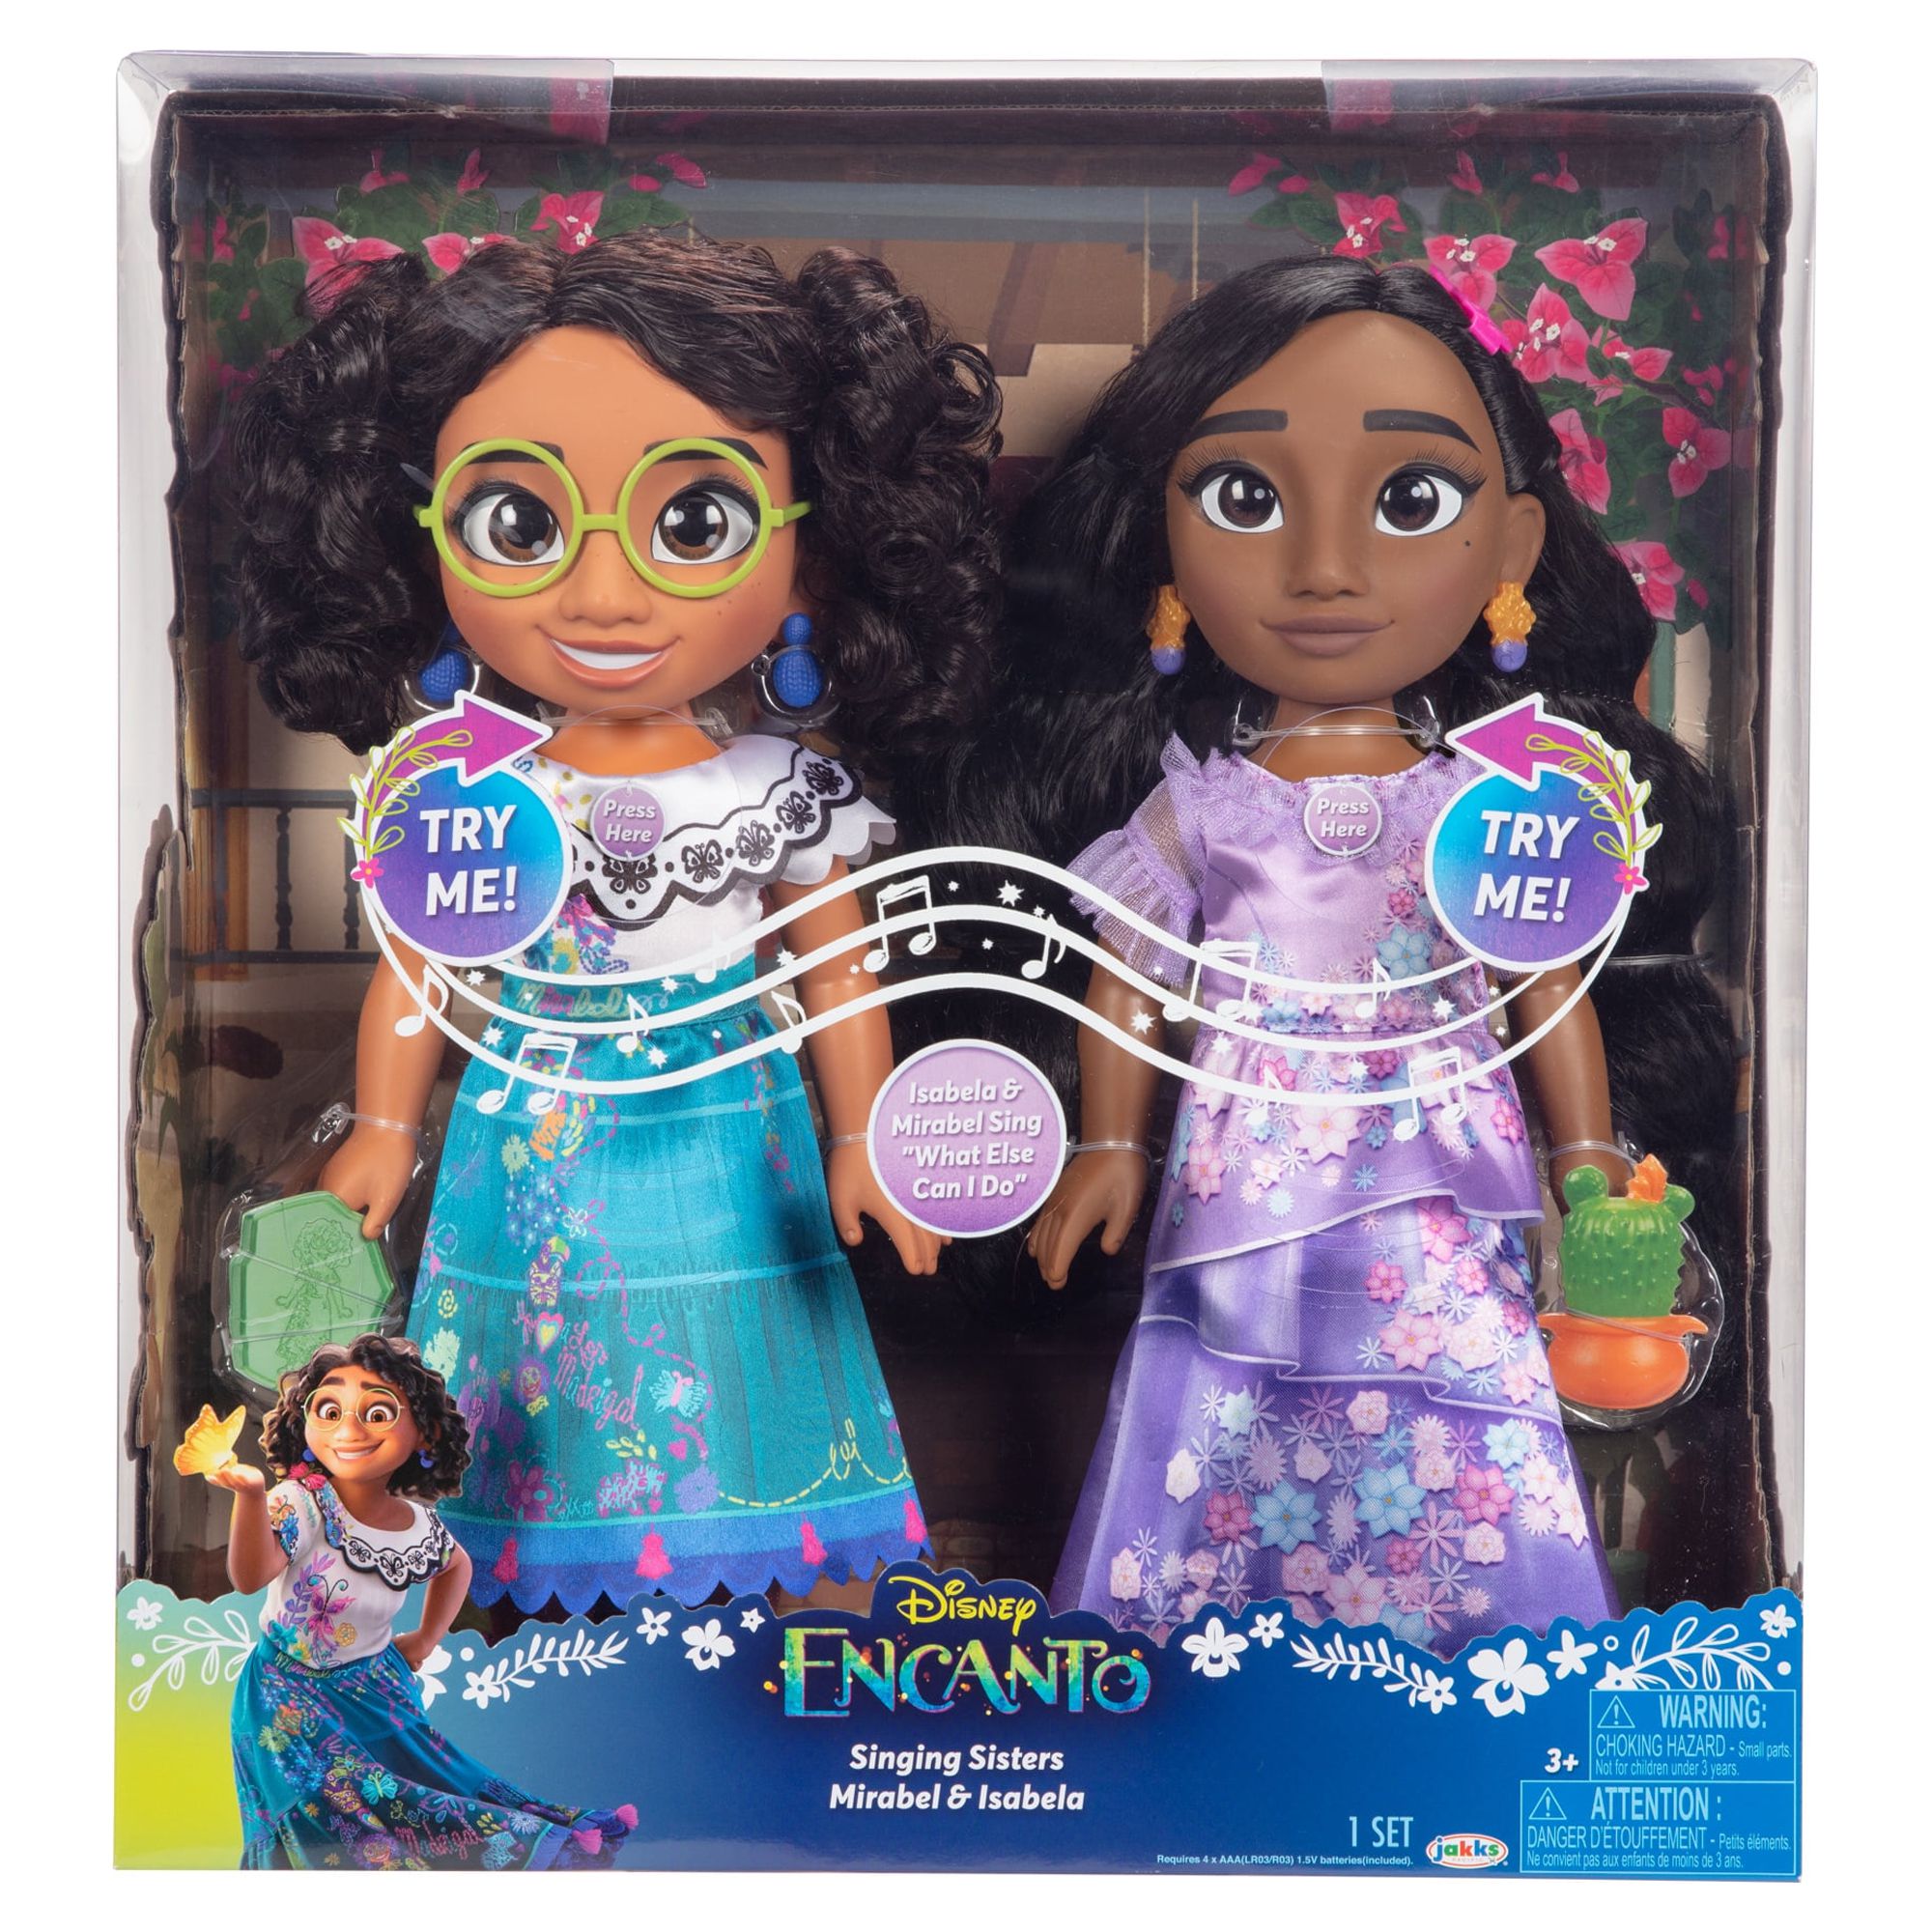 Disney's Encanto Singing Sisters Mirabel and Isabela Fashion Toddler Doll Gift Set - image 2 of 5